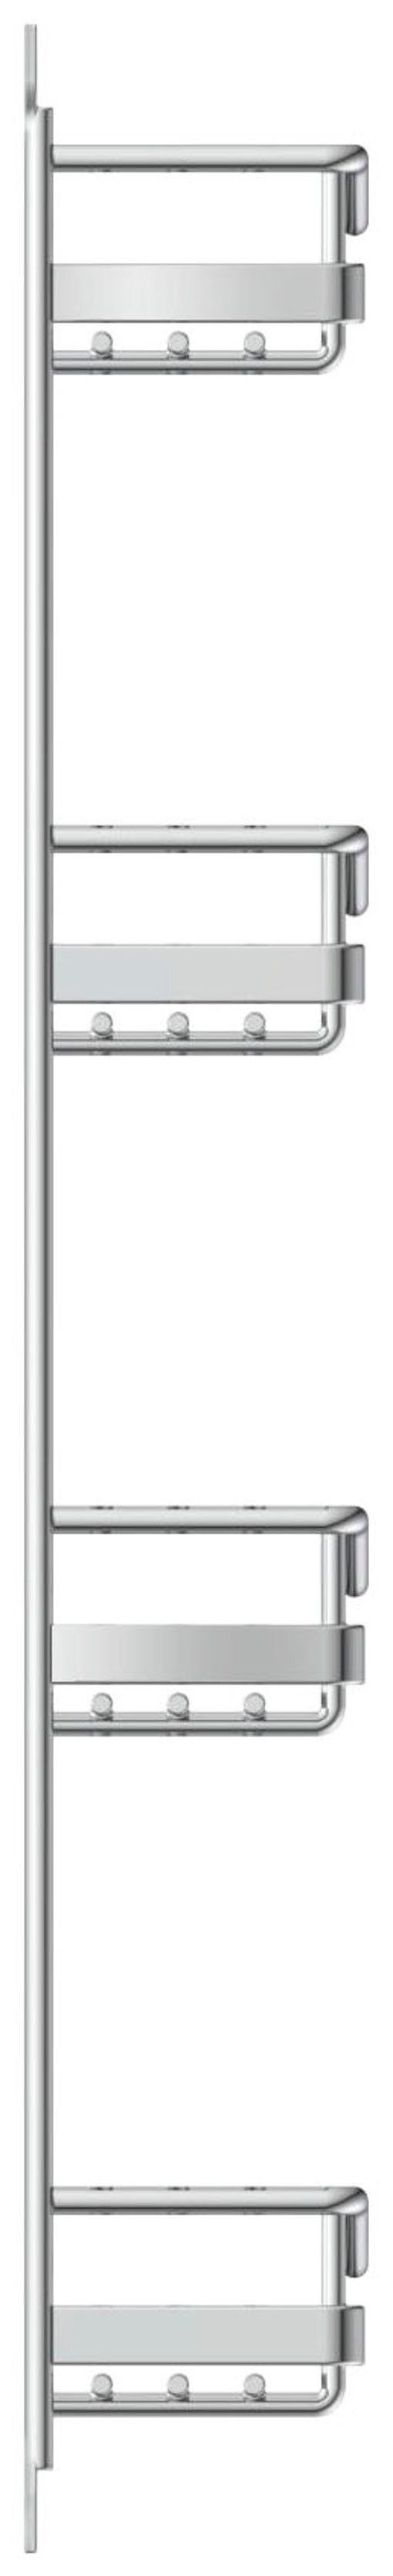 Schütte Gewürzregal Reling, 65 Chrom x x 375 mm, 426